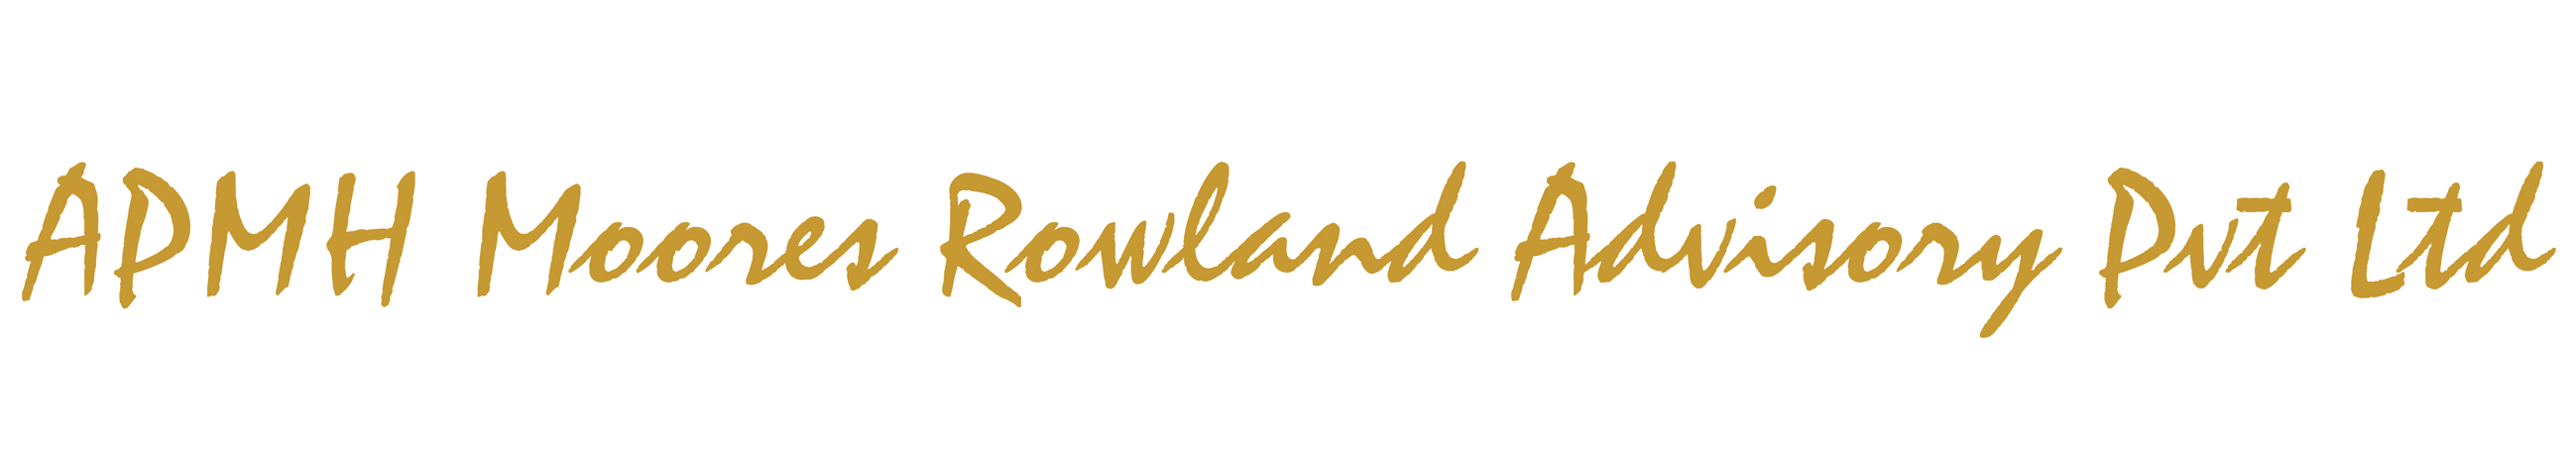 APMH Moores Rowland Advisory Pvt. Ltd. logo